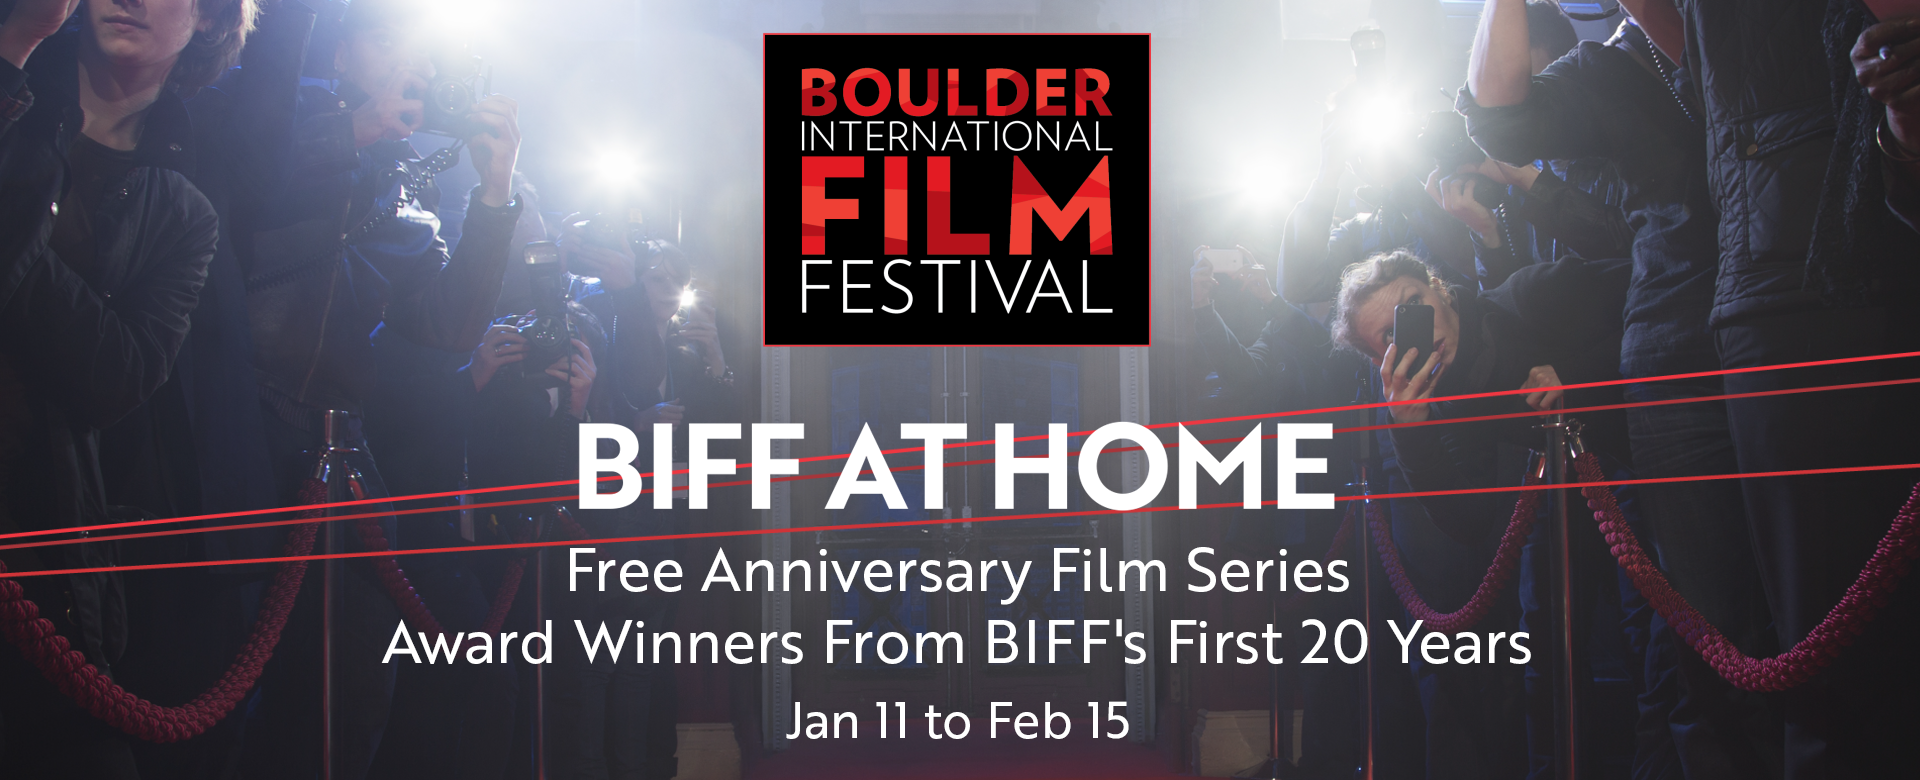 BIFF at HOME Virtual screenings header background